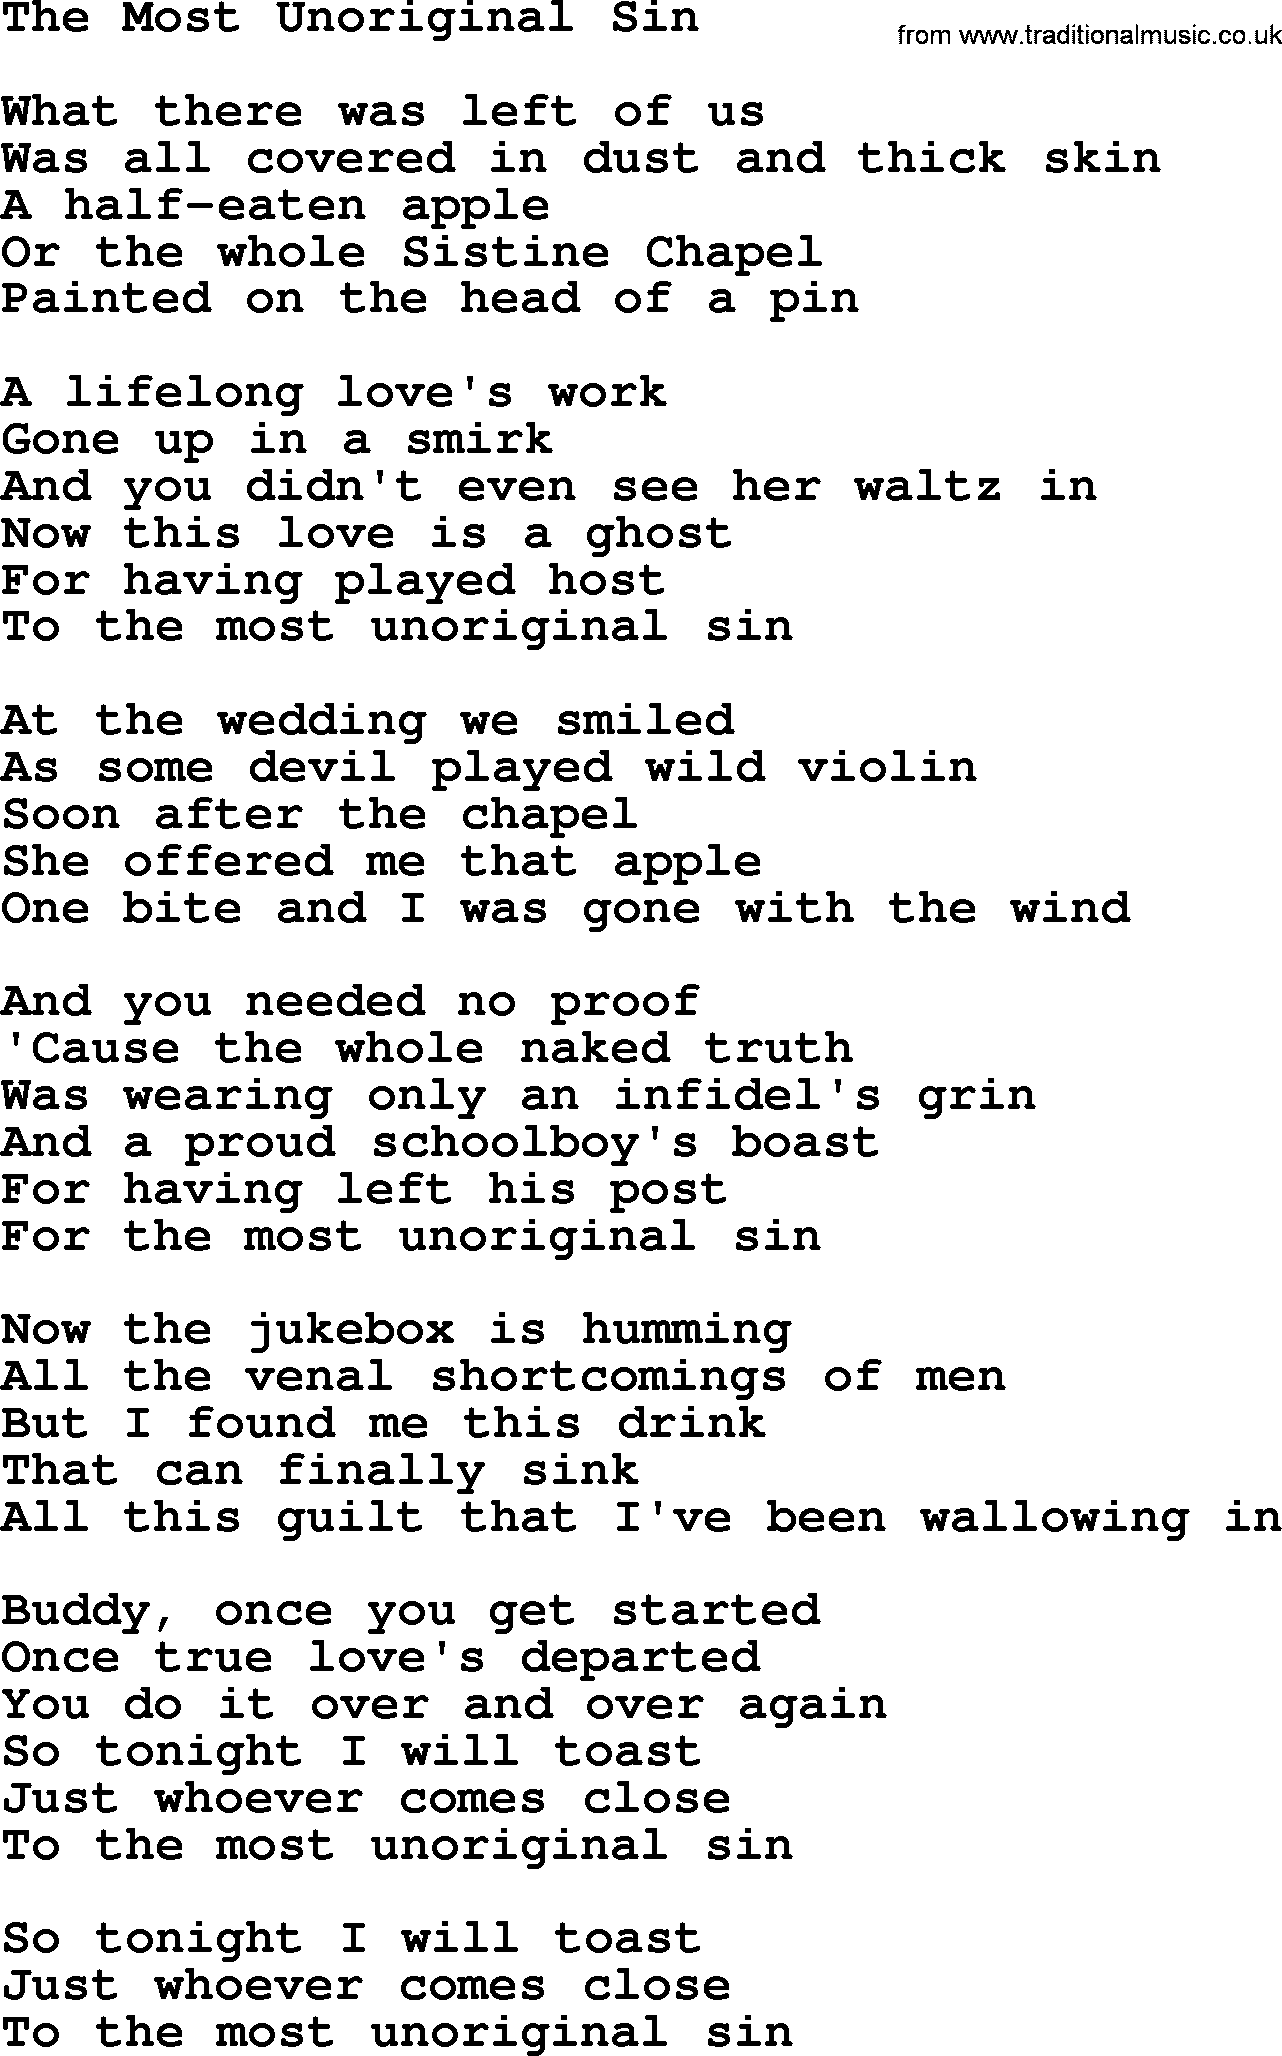 Willie Nelson song: The Most Unoriginal Sin lyrics